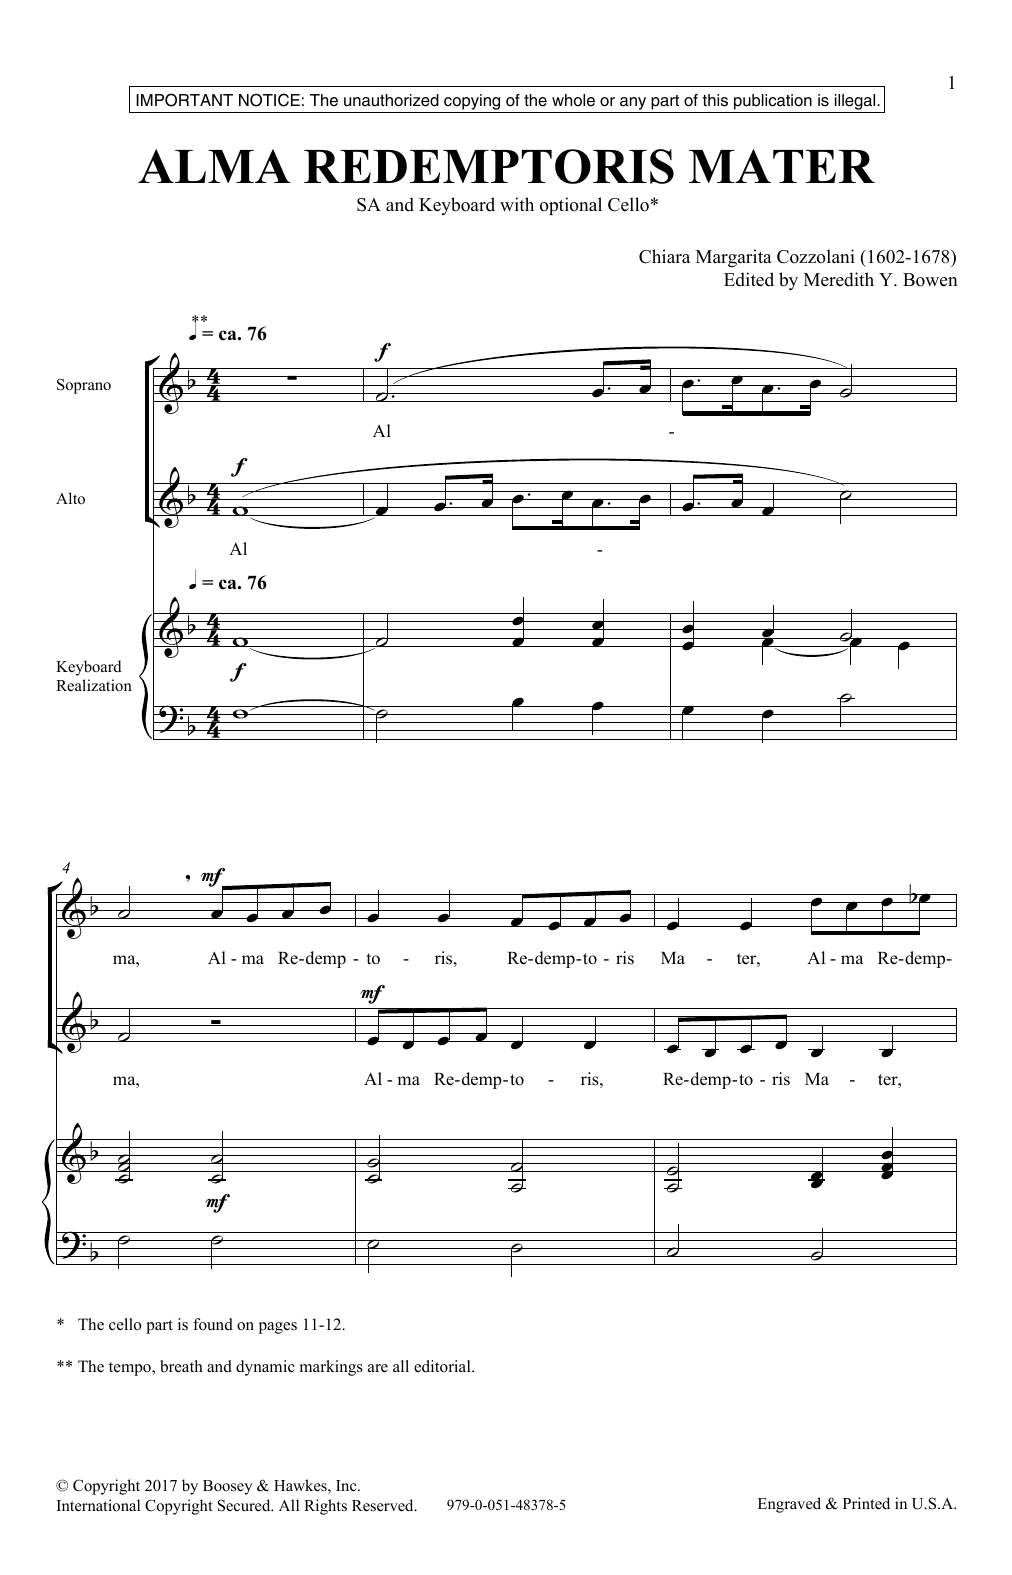 Meredith Y. Bowen Alma Redemptoris Mater Sheet Music Notes & Chords for 2-Part Choir - Download or Print PDF